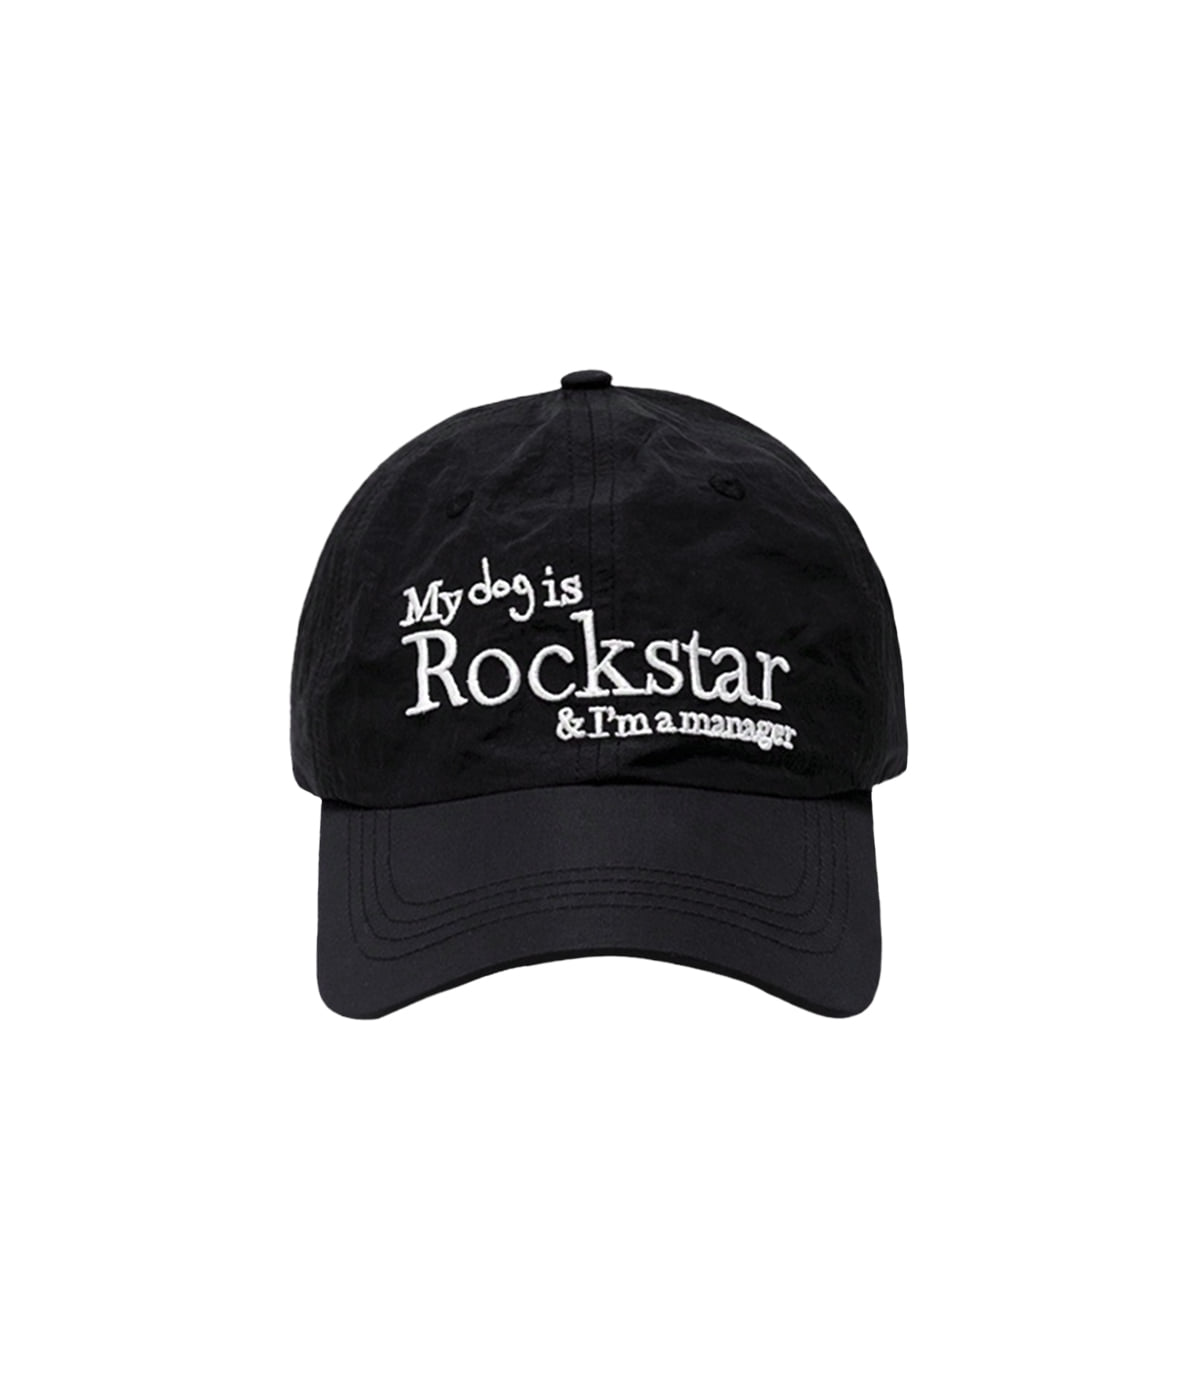 Rockstar dog cap (Black)